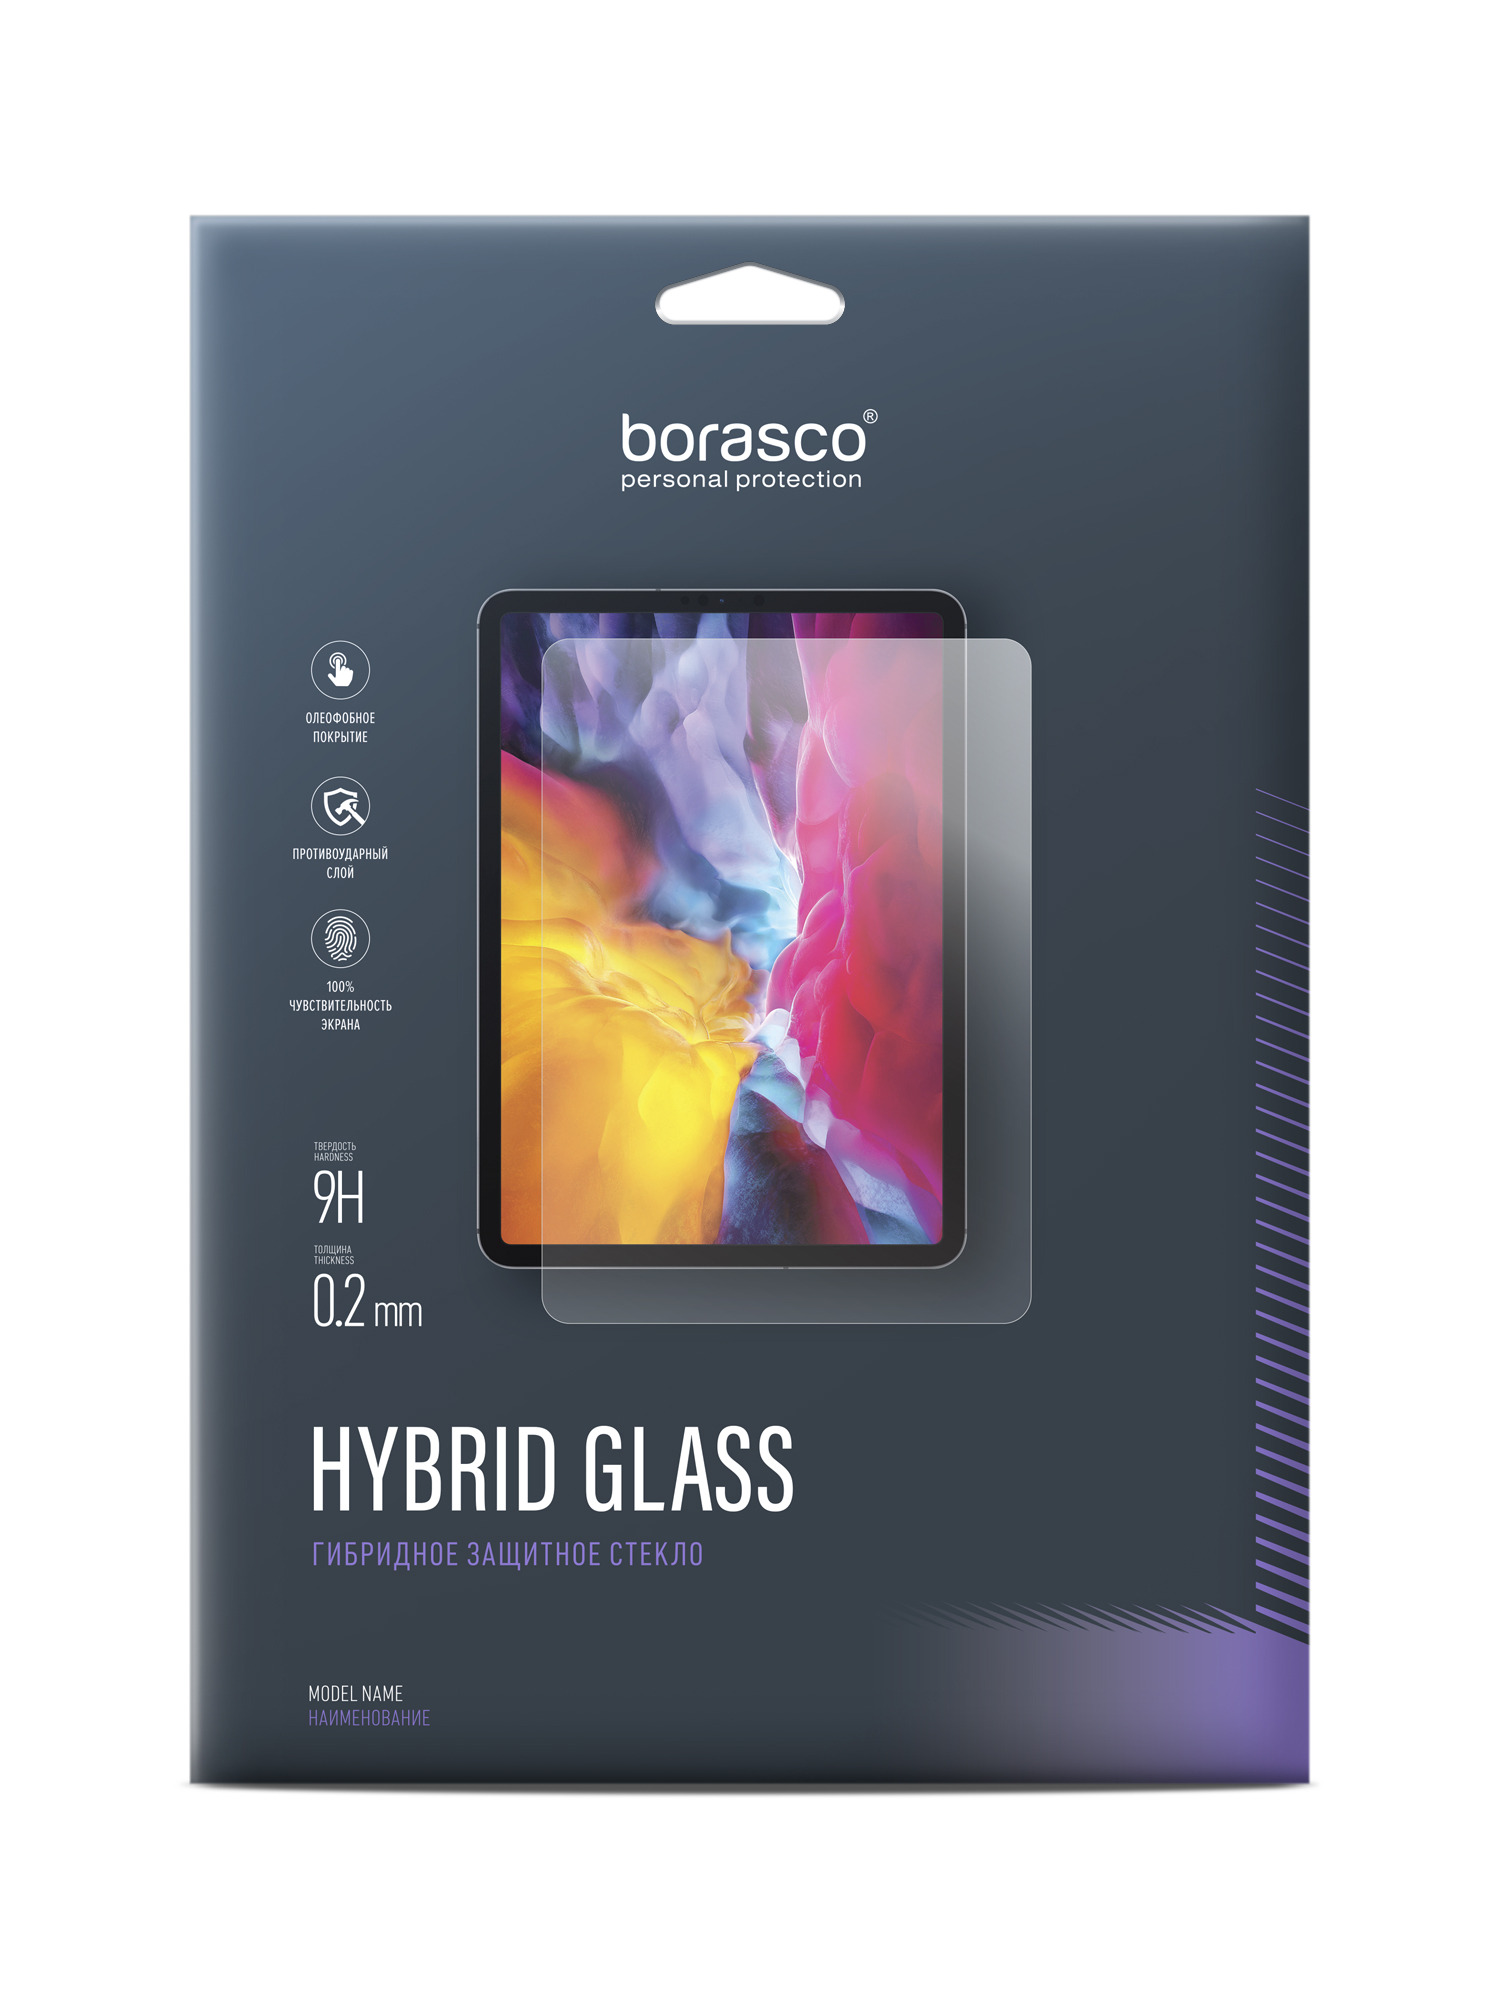 Защитное стекло Hybrid Glass для Huawei MediaPad T5 10 защитное стекло для планшета huawei mediapad t5 10 10 1 дюйма t3 m5 m6 t10 t8 2 шт